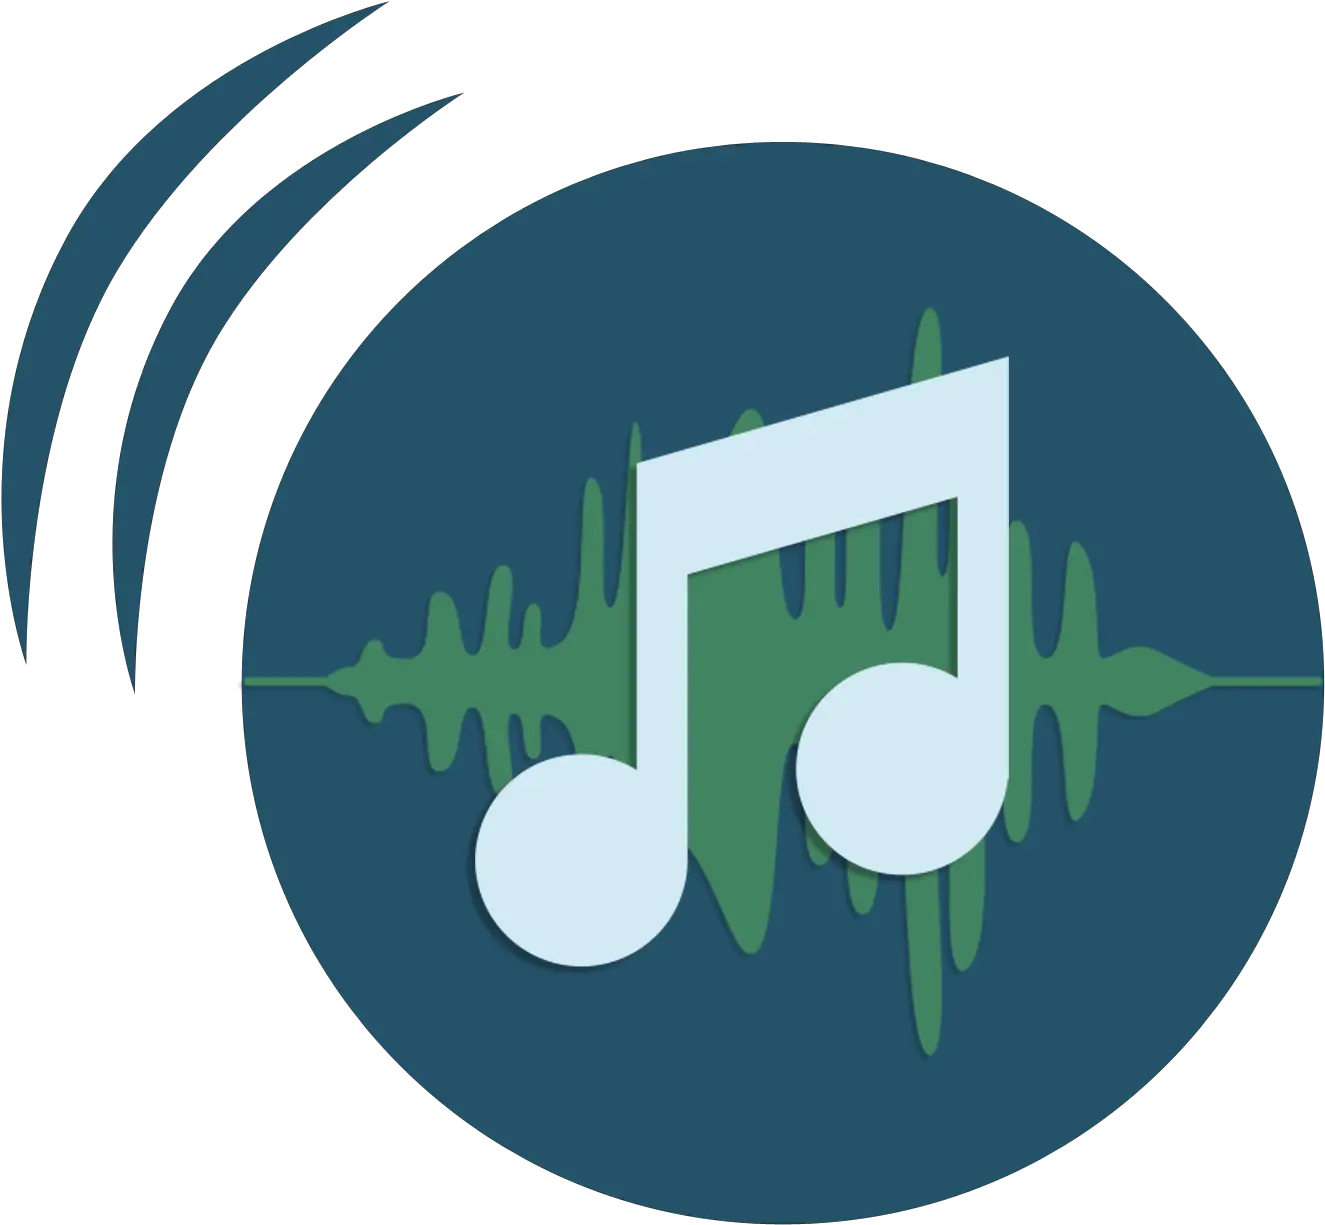 Free Mp3 Music Script Grabber From Vk Com For 10 Free Music Logo Png Hd Vk Logo